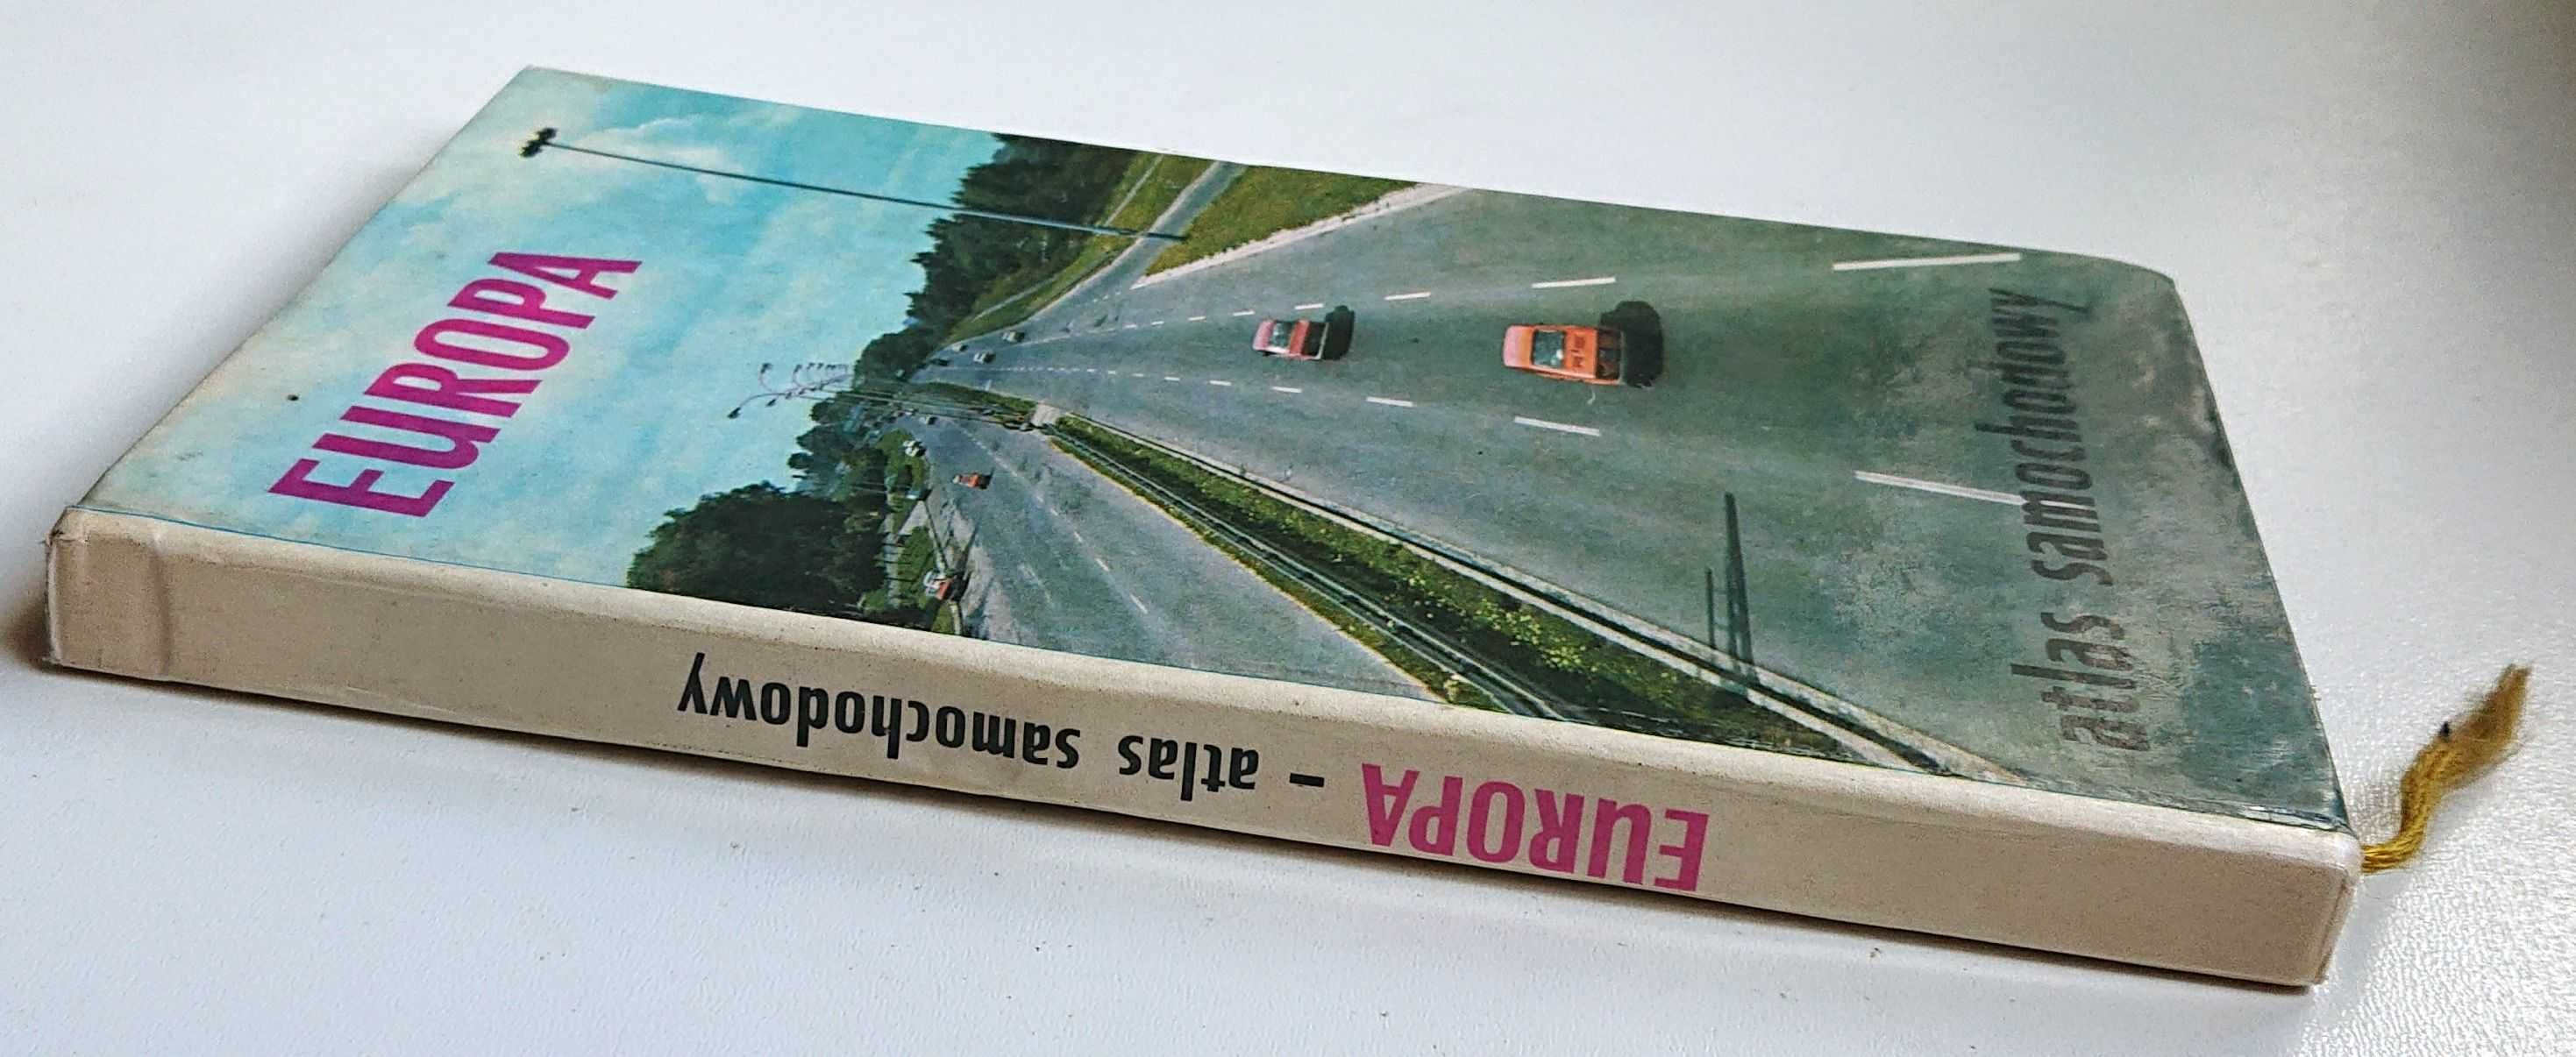 "Europa - atlas samochodowy" - 1986